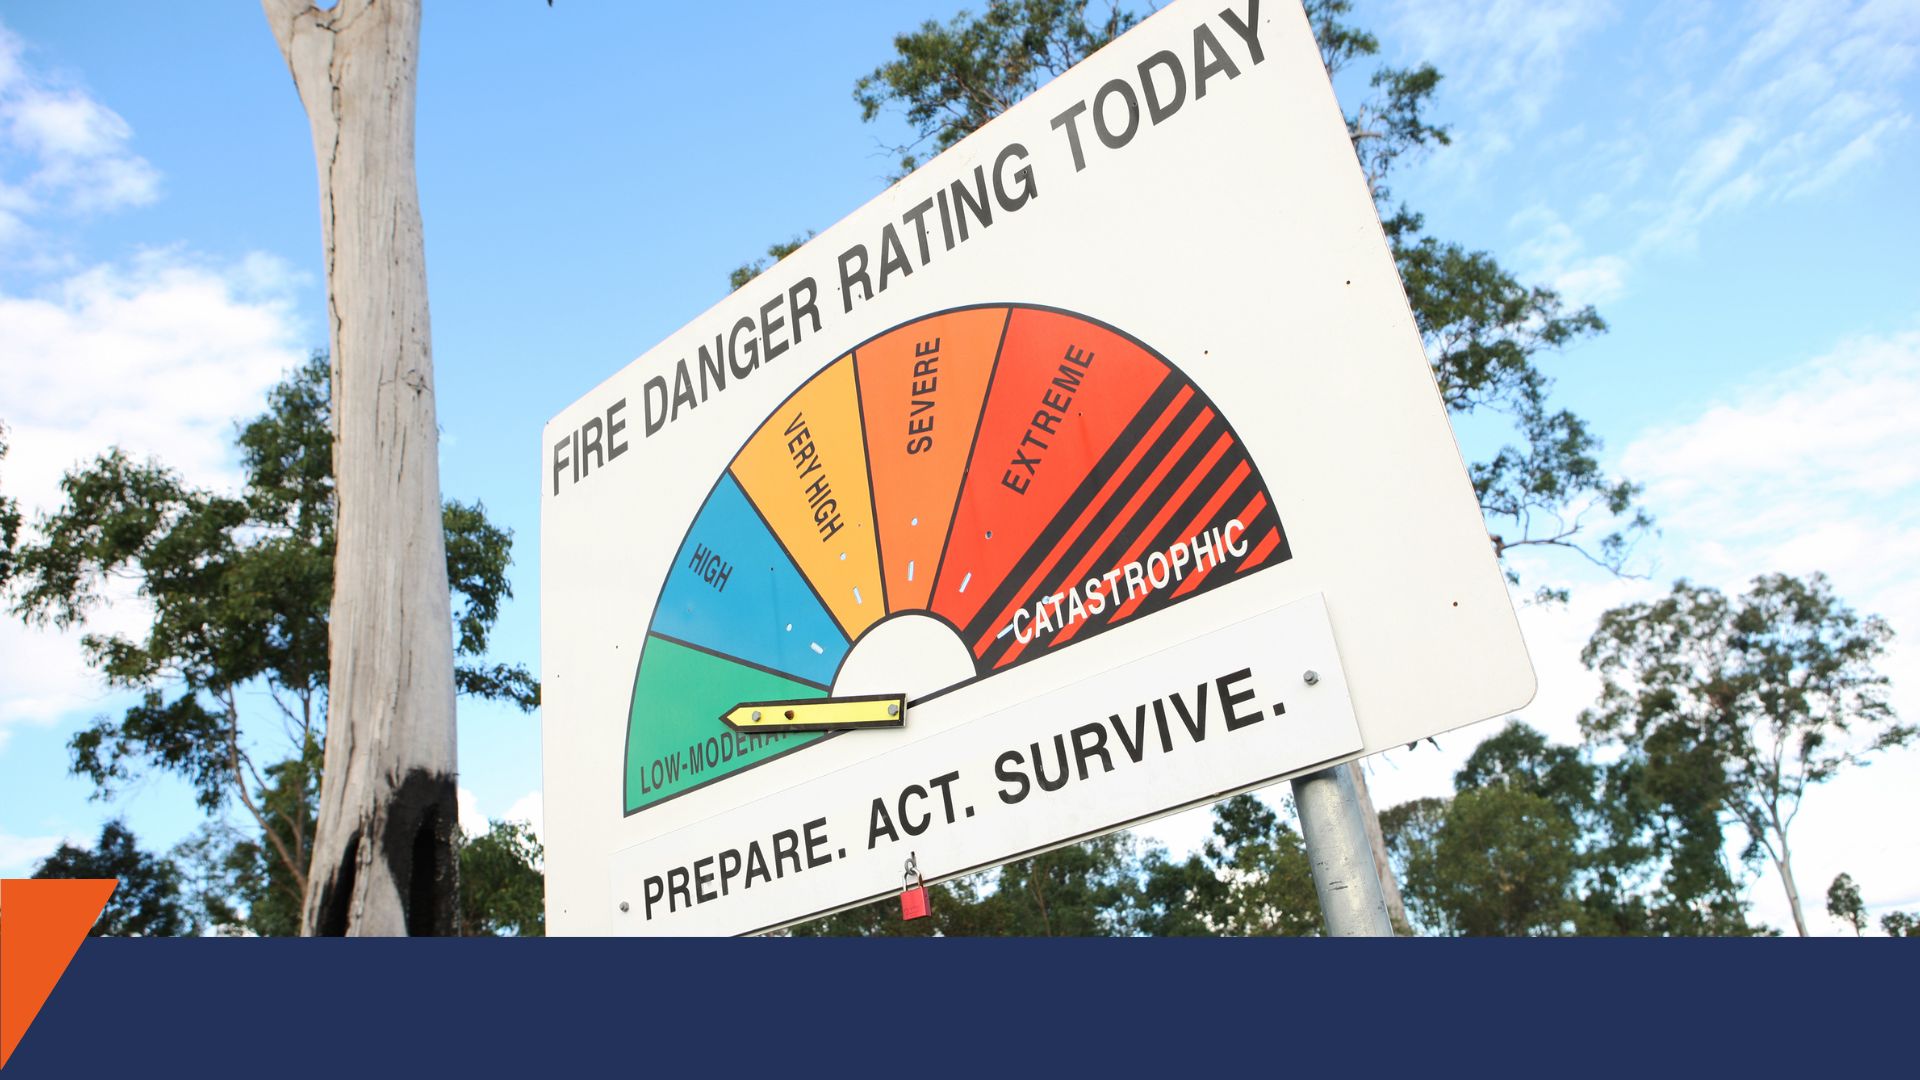 Bushfires in Australia – Fire Preparedness is the crisis key